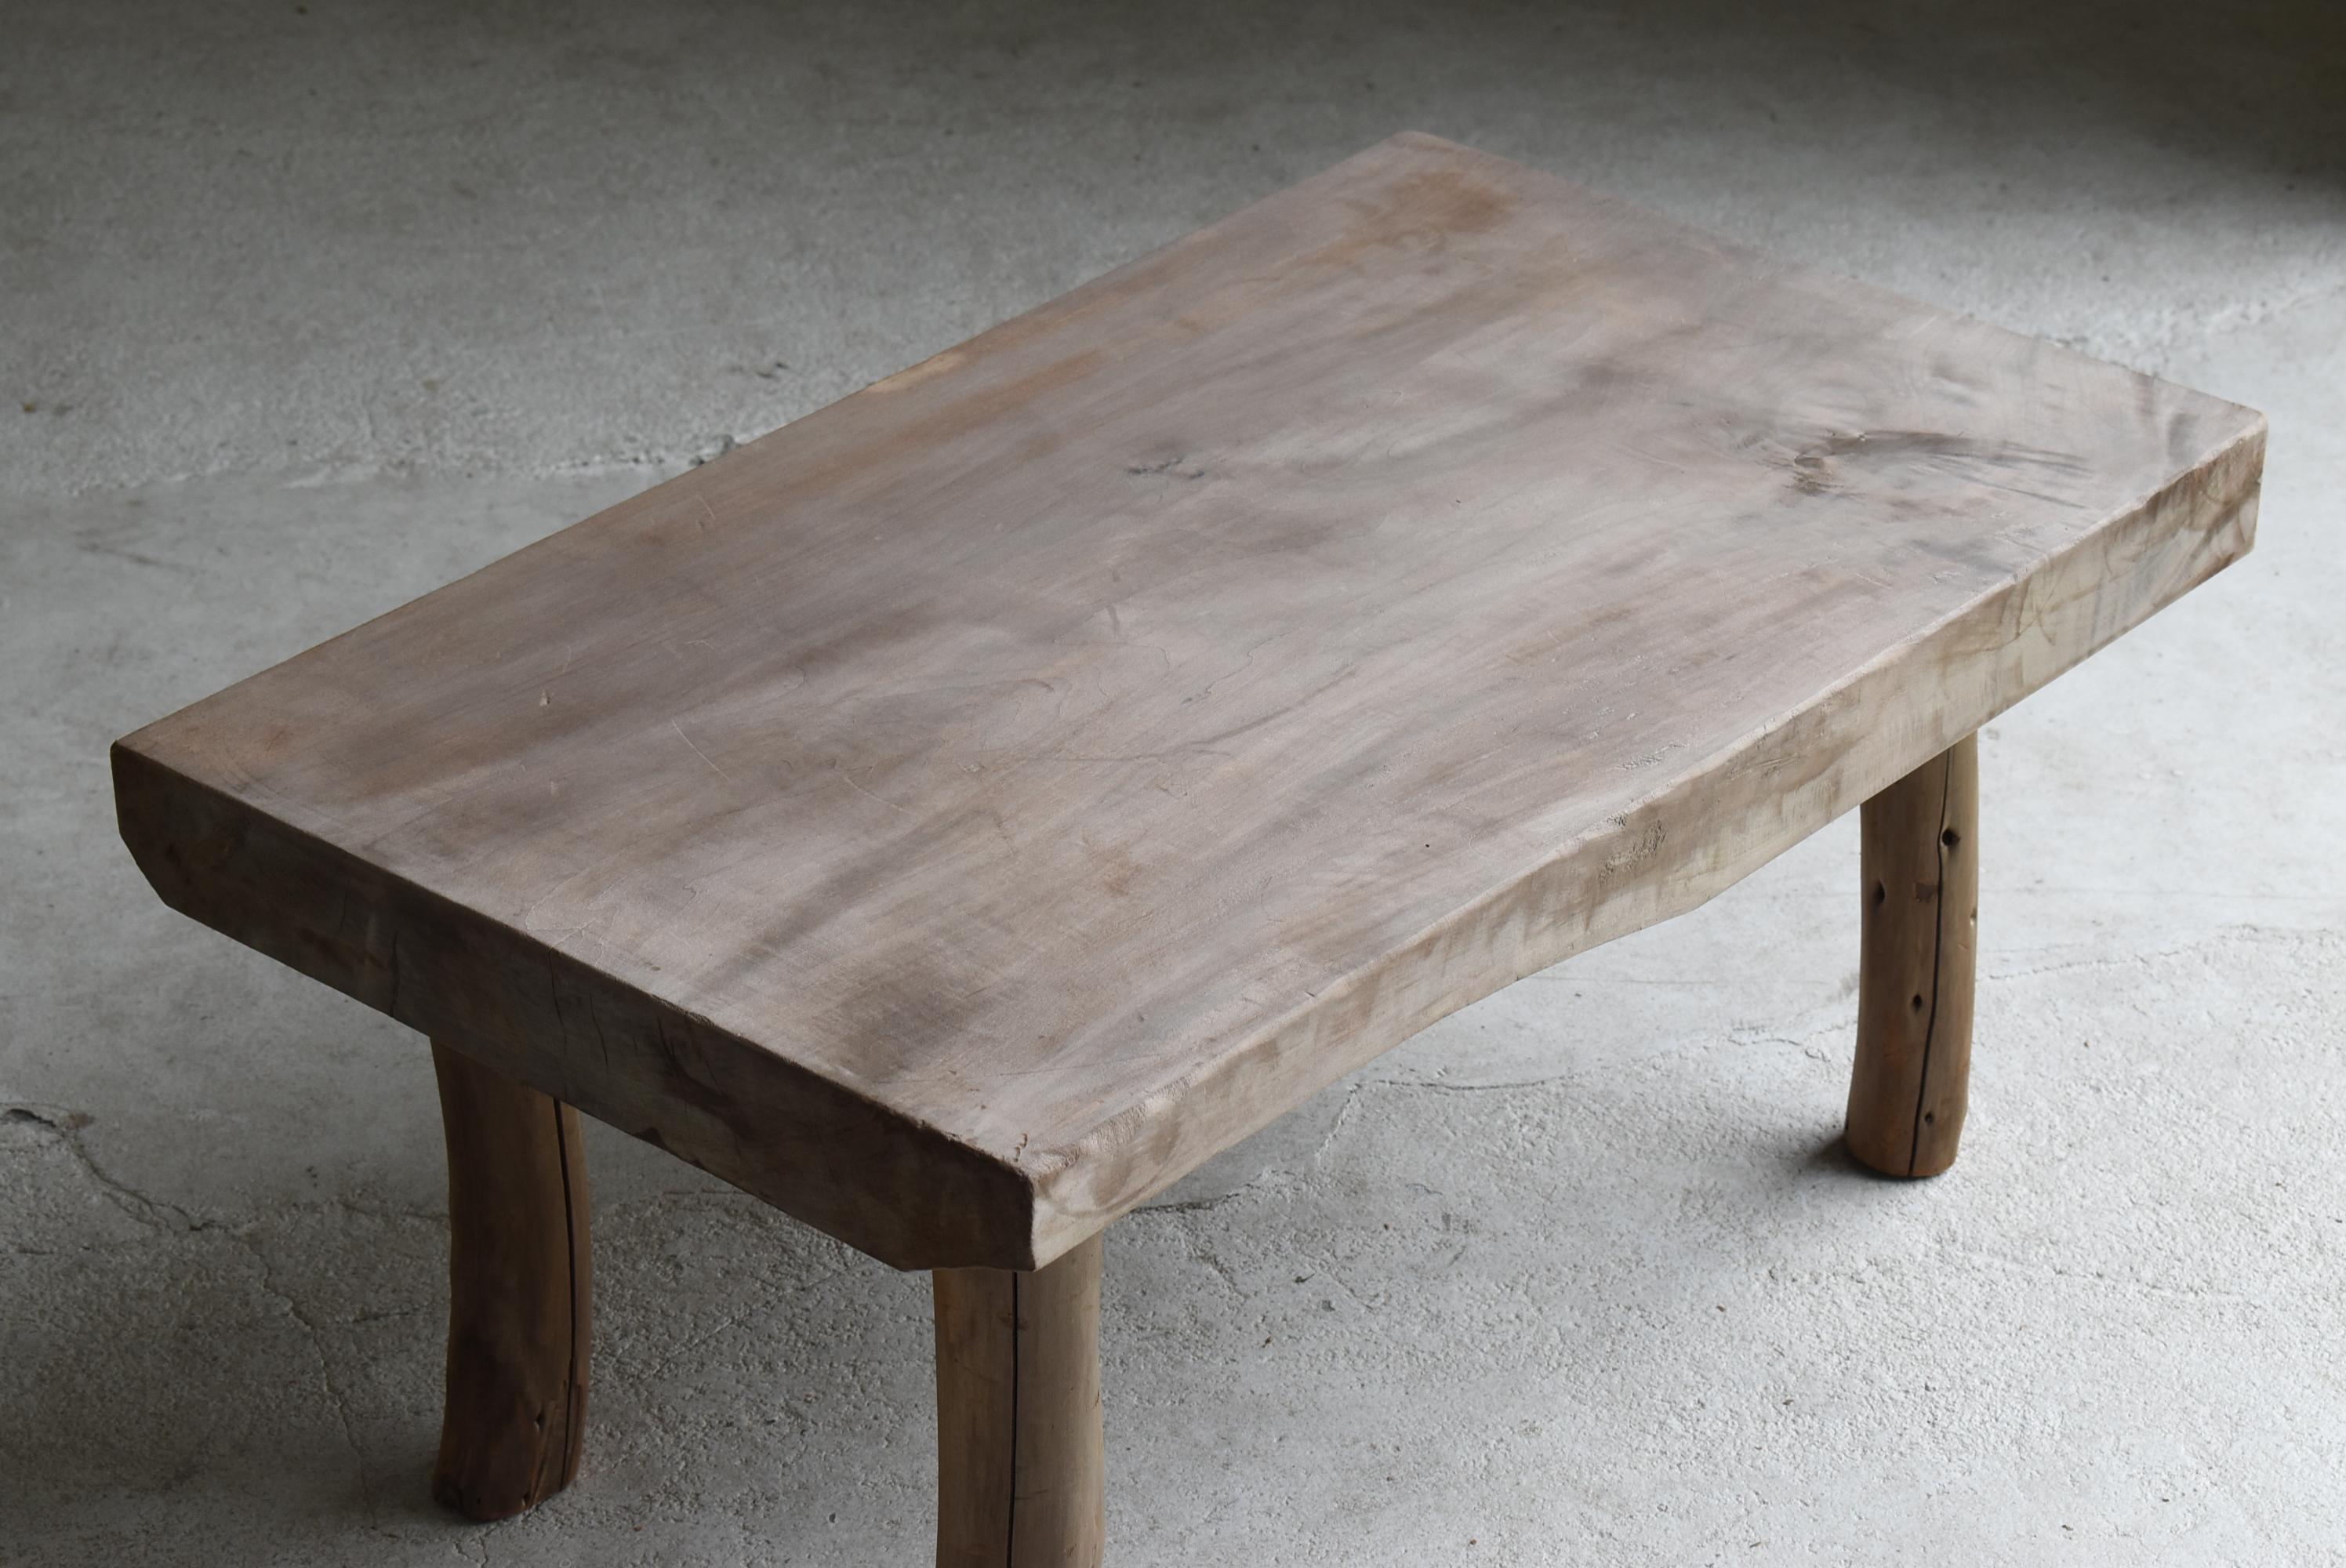 Wood Japanese Antique Low Table 1900s-1940s / Mingei Wabi Sabi Sofa Table